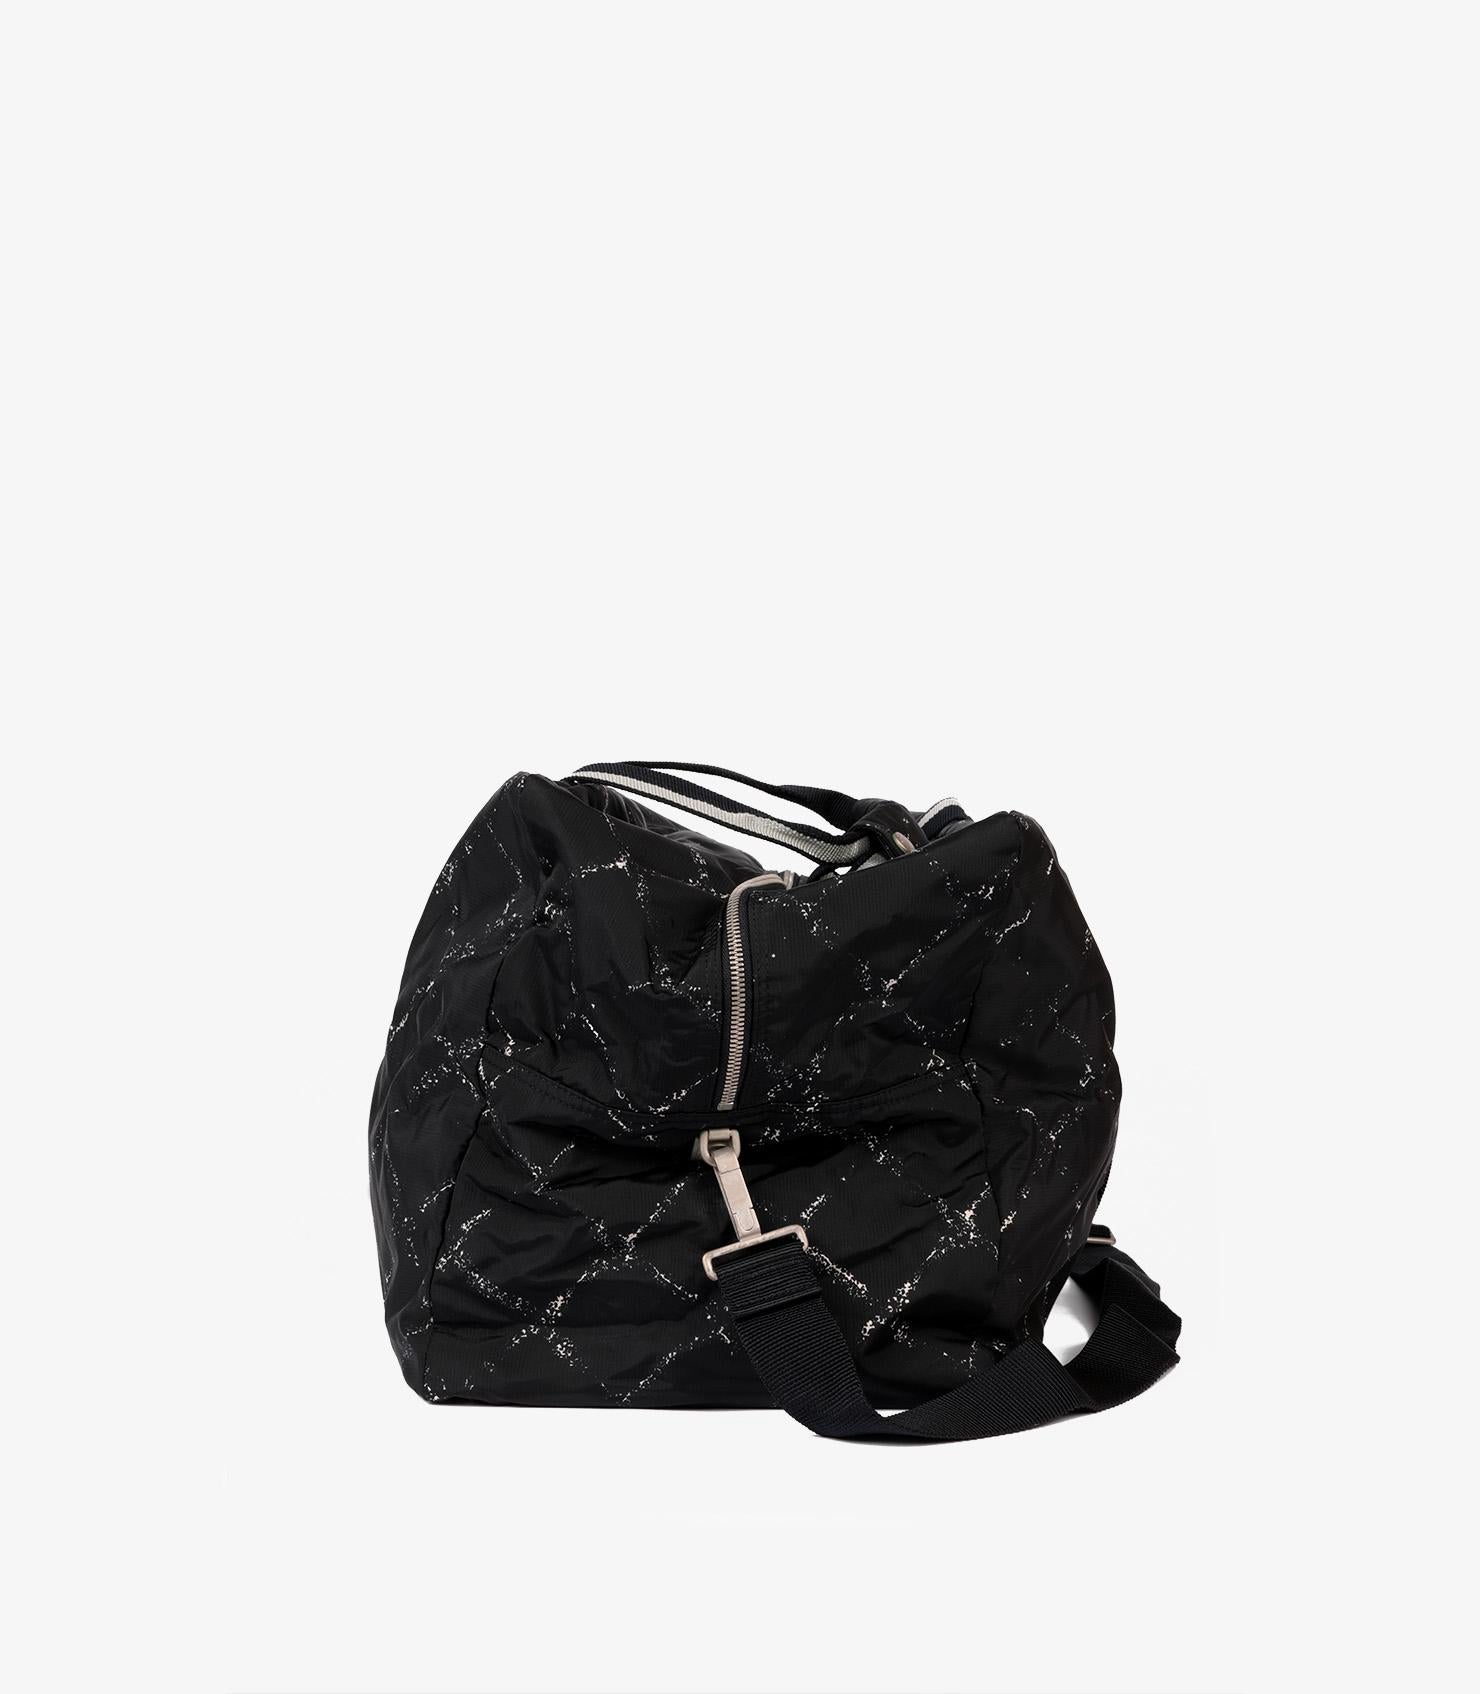 Chanel Black & White Nylon Travel Line Duffle Bag 2